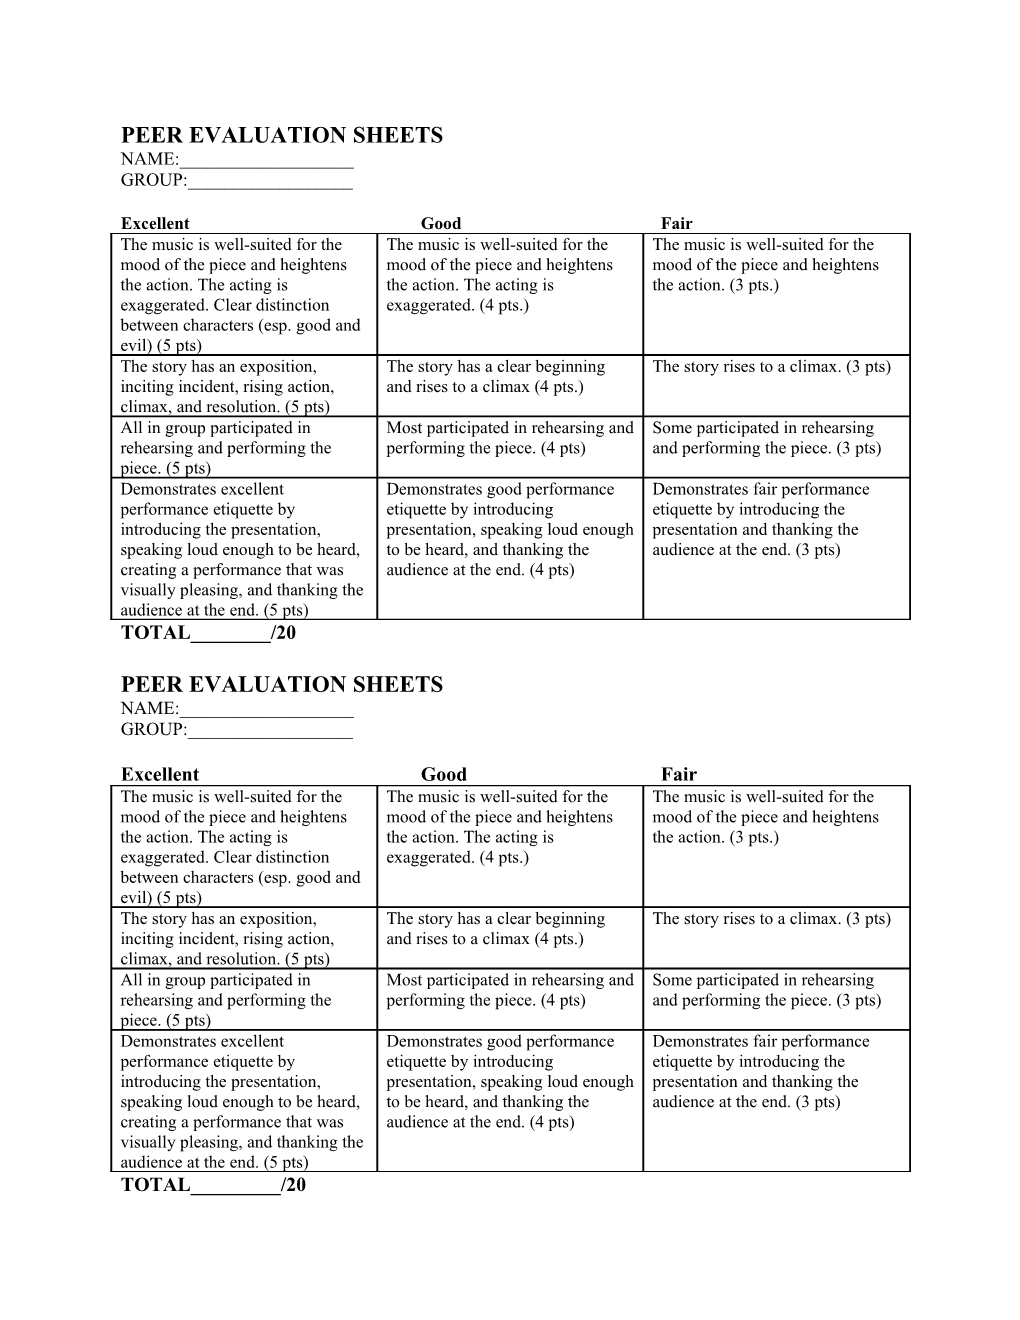 Peer Evaluation Sheets